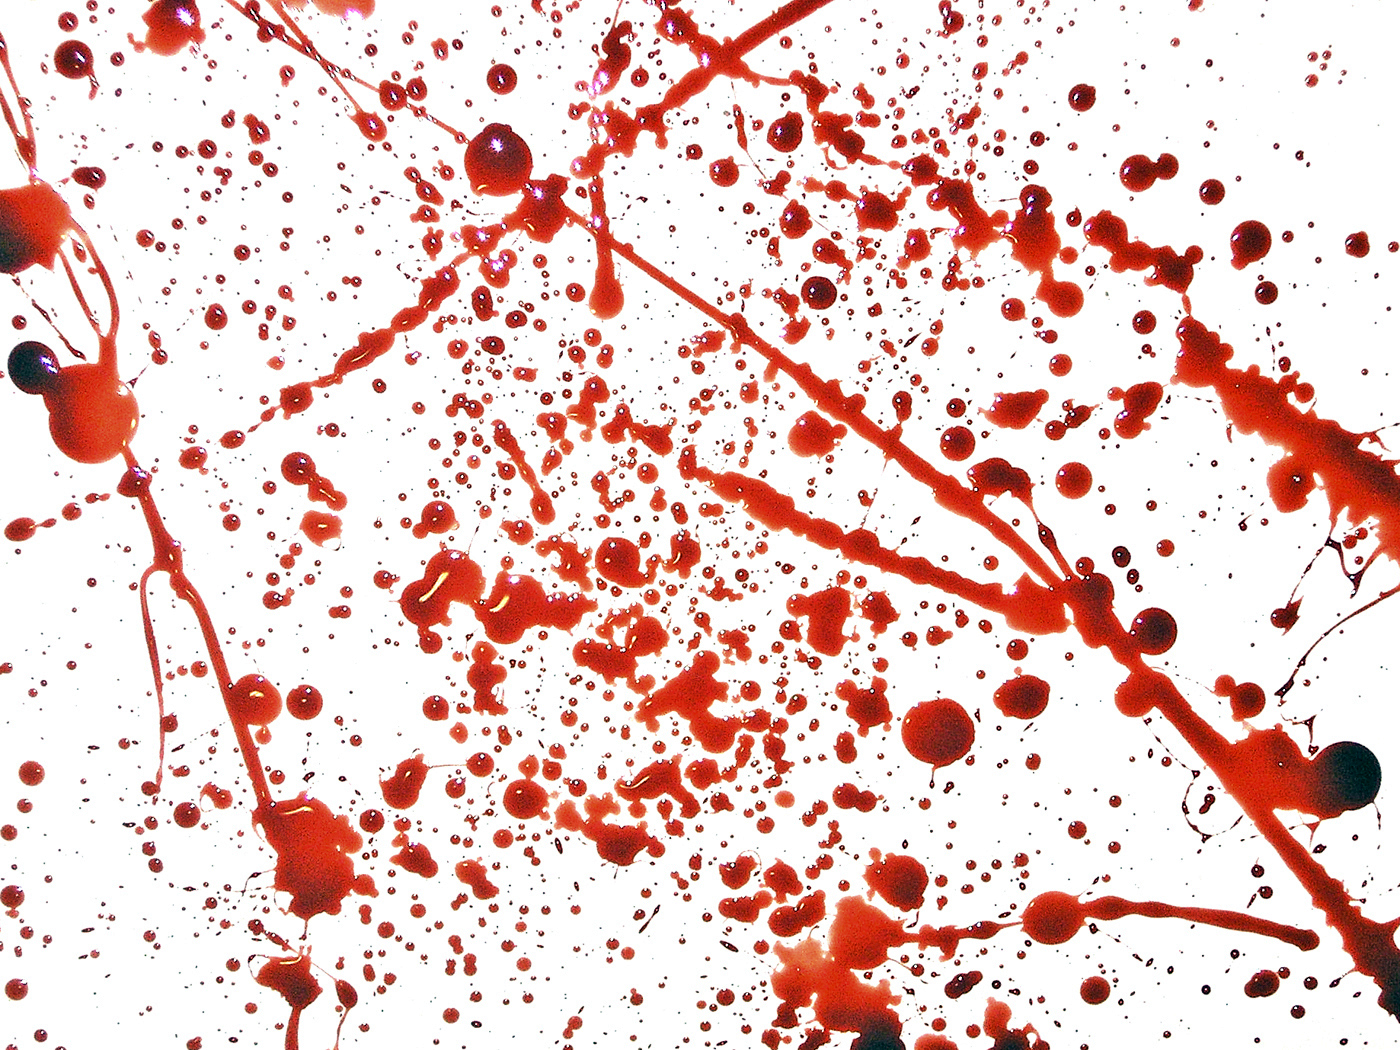 Blood Splatter Wallpaper Picswallpaper